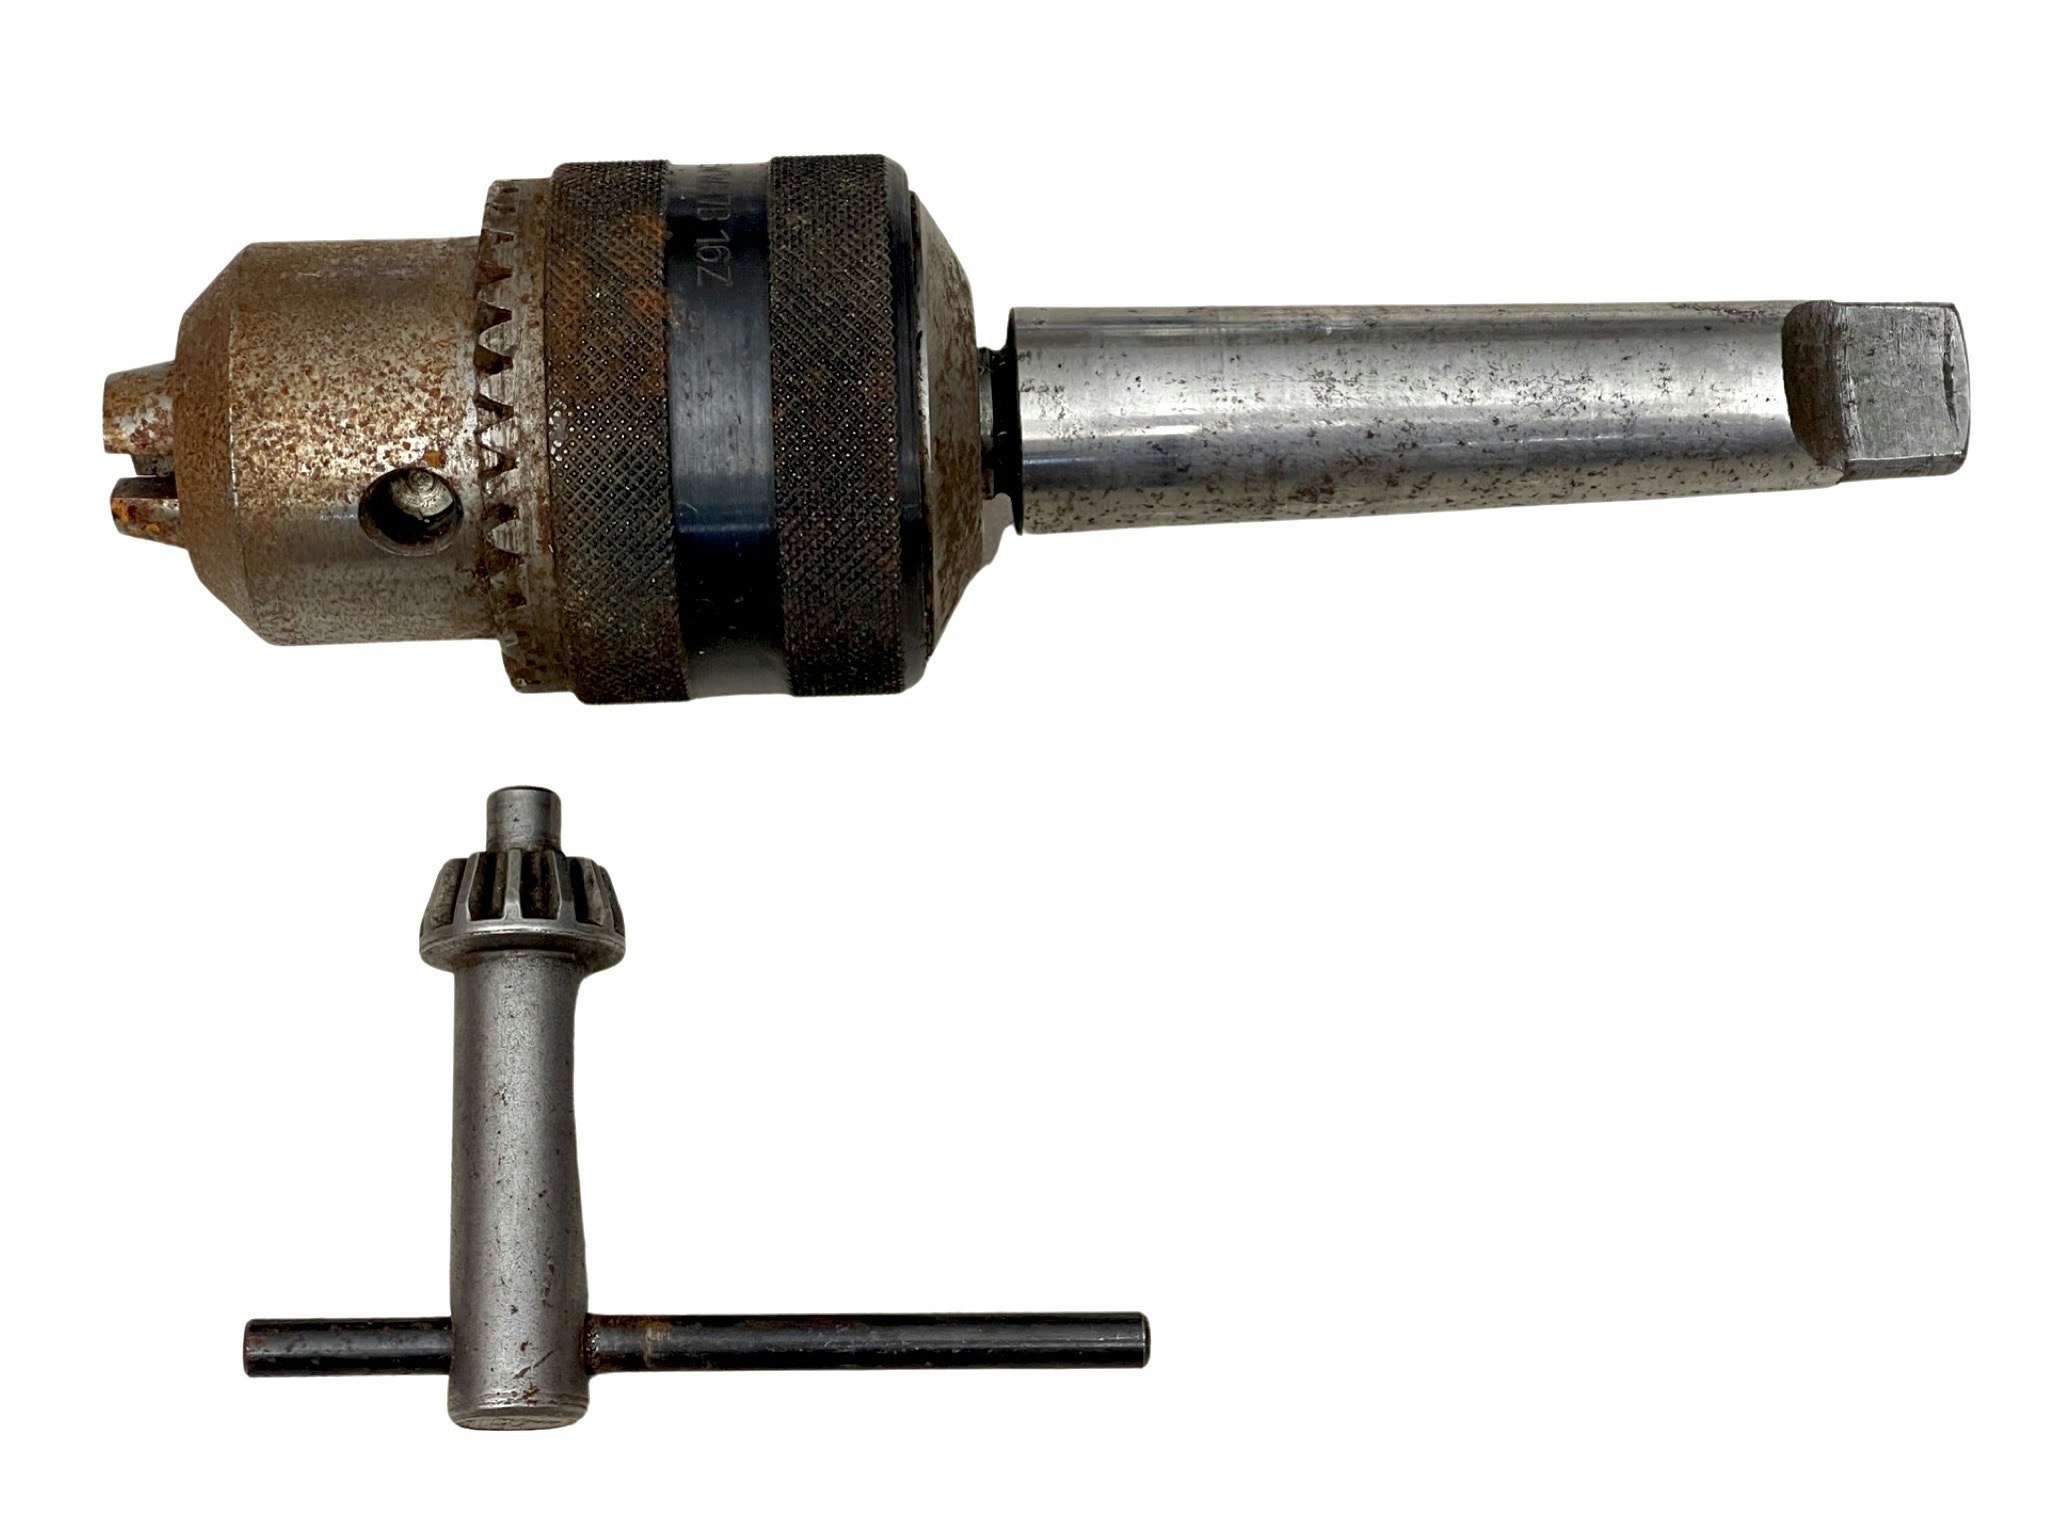 Bosch 2118 EWWH7B Drill chuck Liner and key